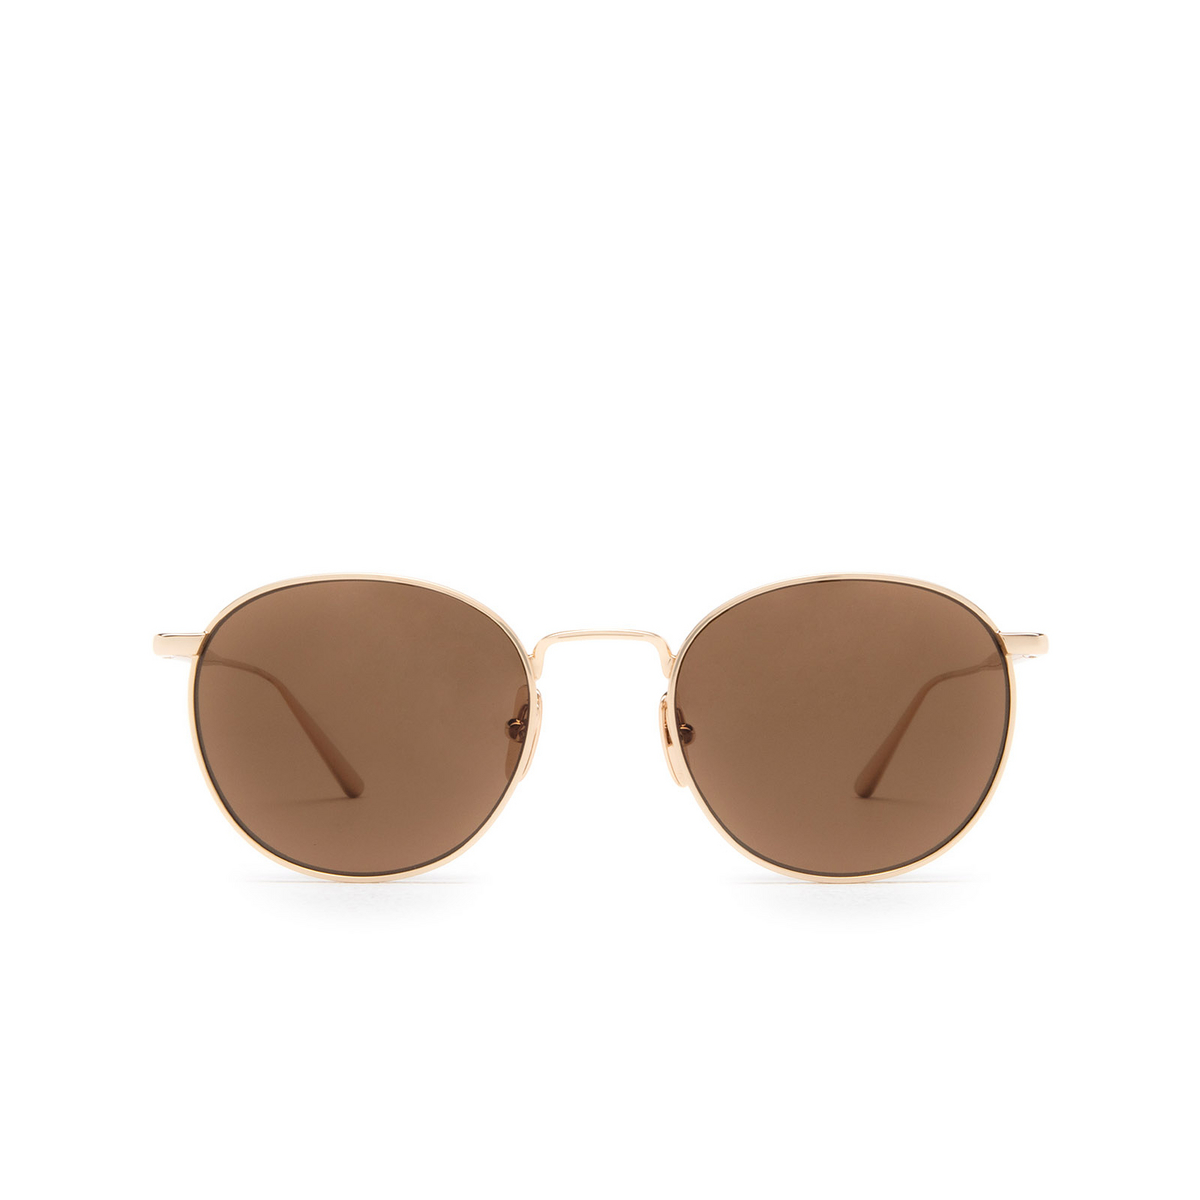 Chimi ROUND Sunglasses BROWN - 1/4